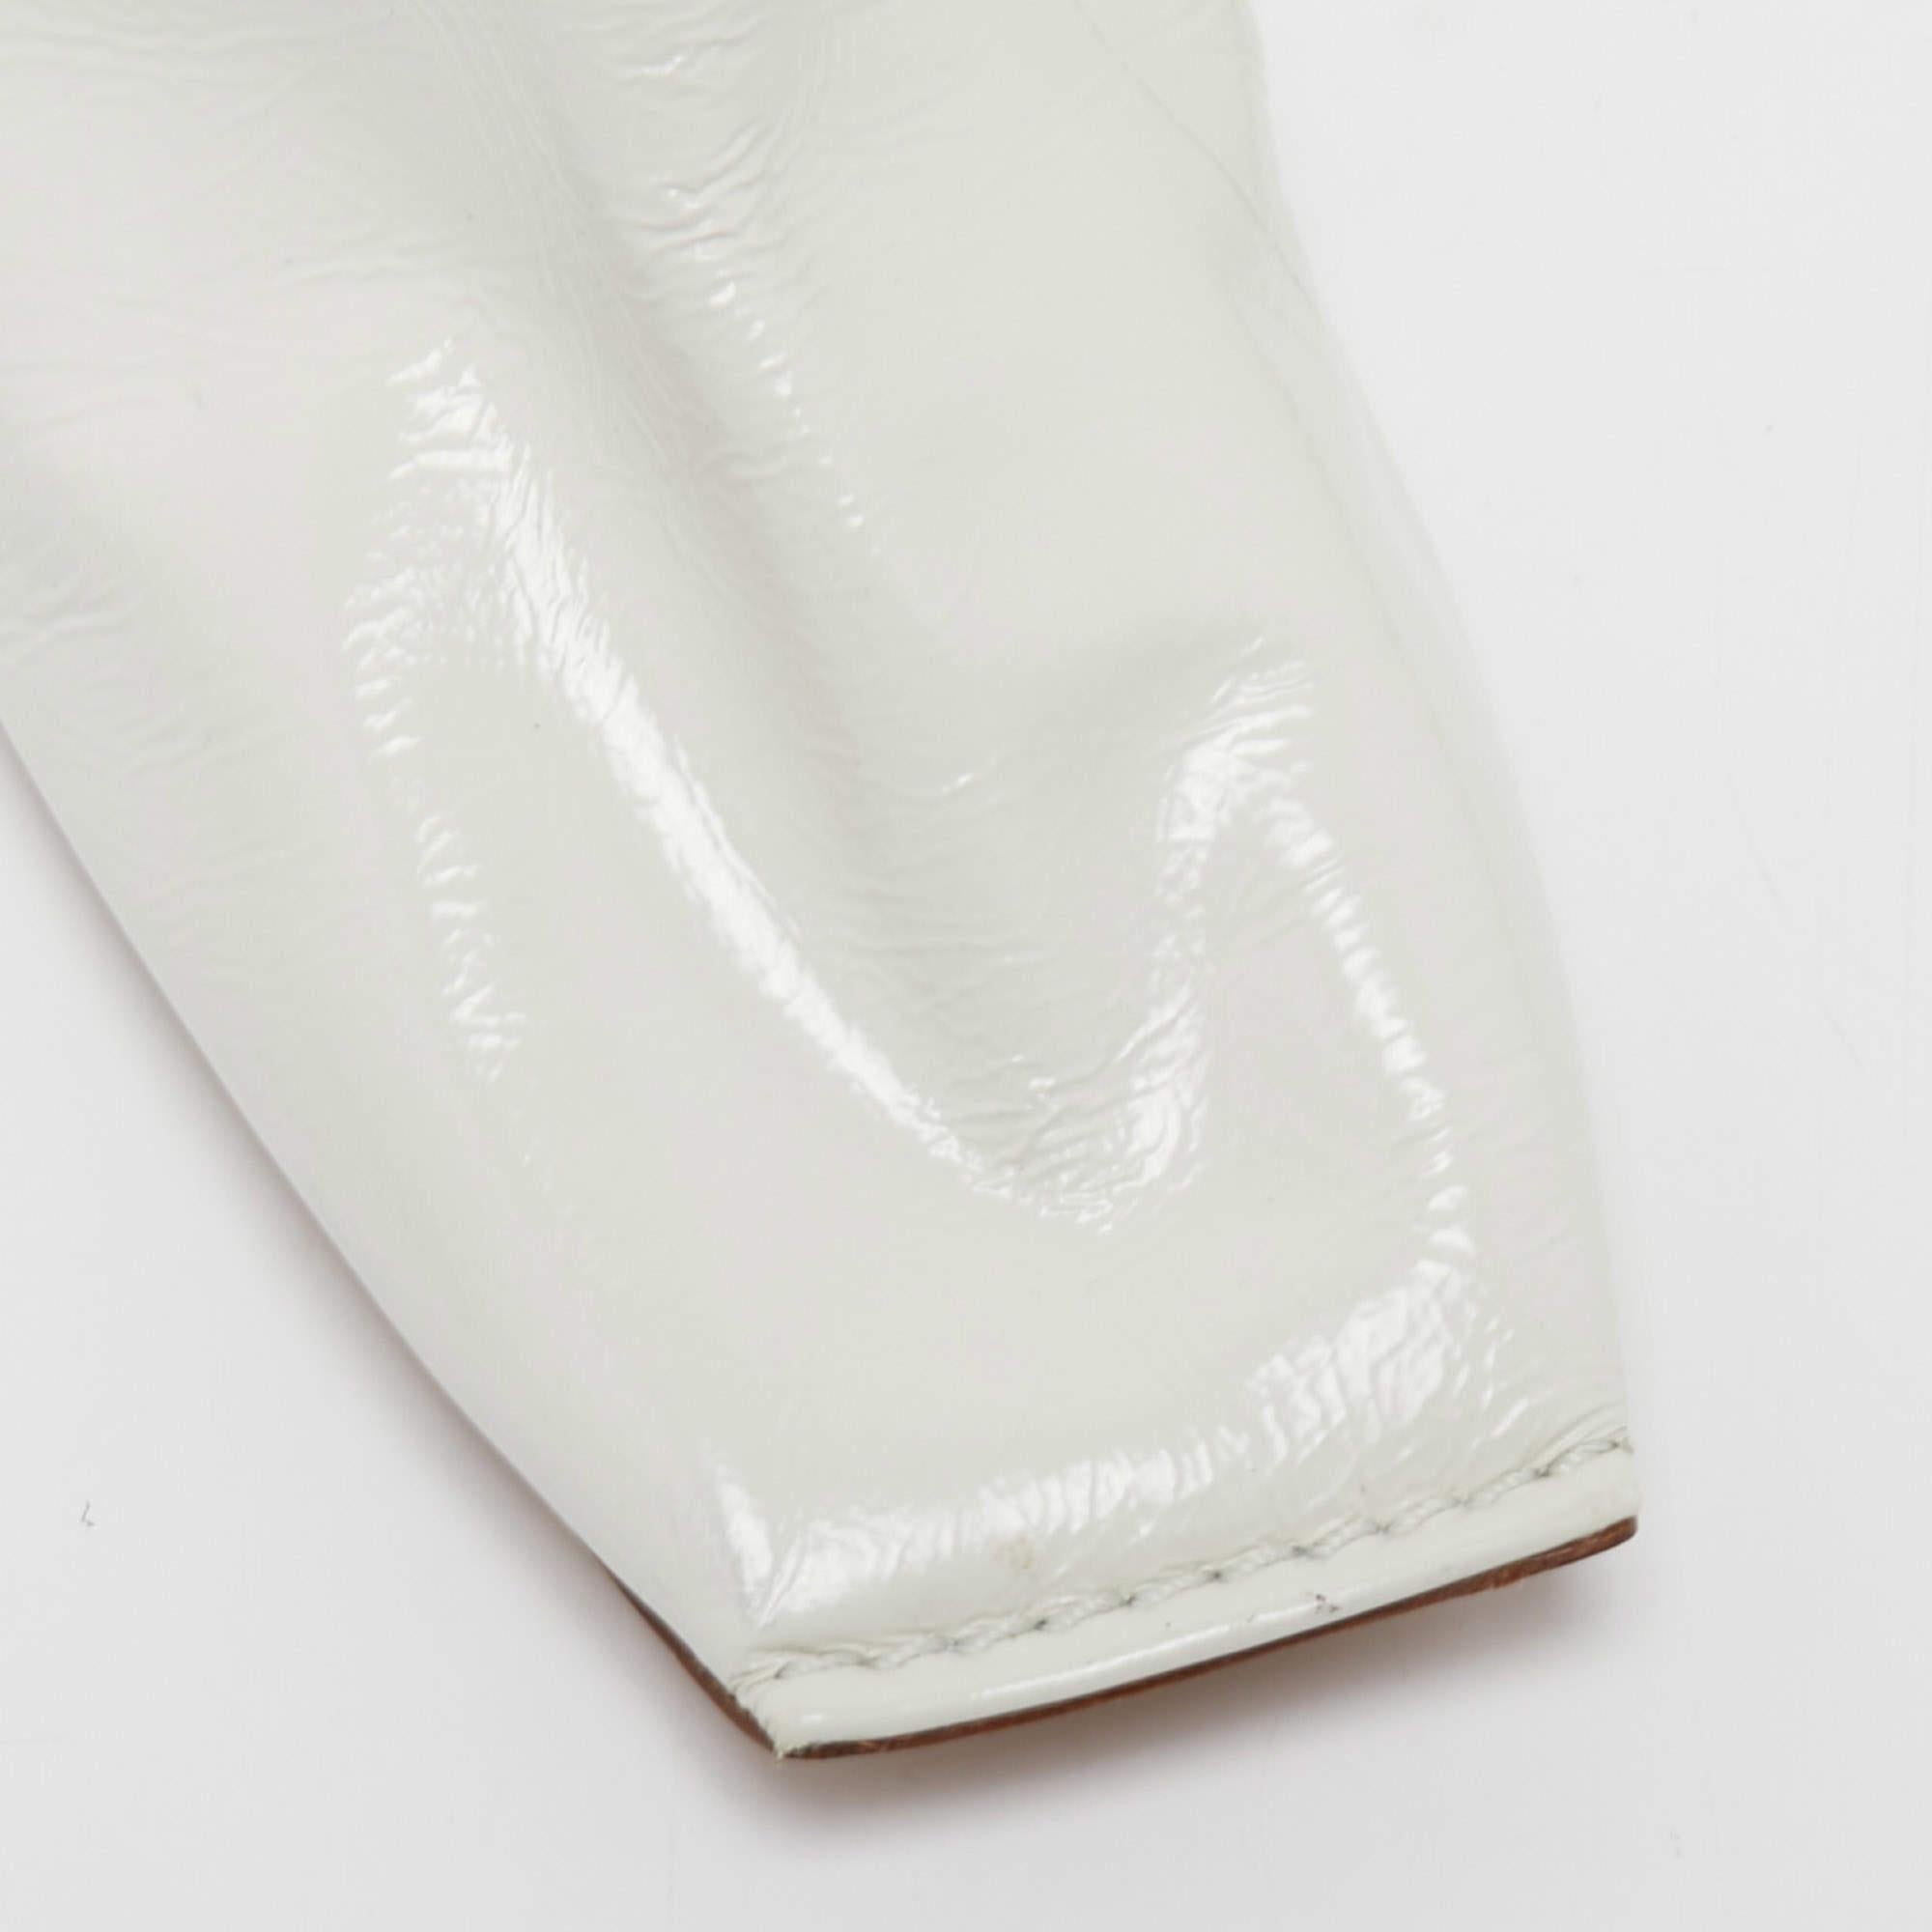 Balenciaga White Leather Square Toe Booties Size 38 2